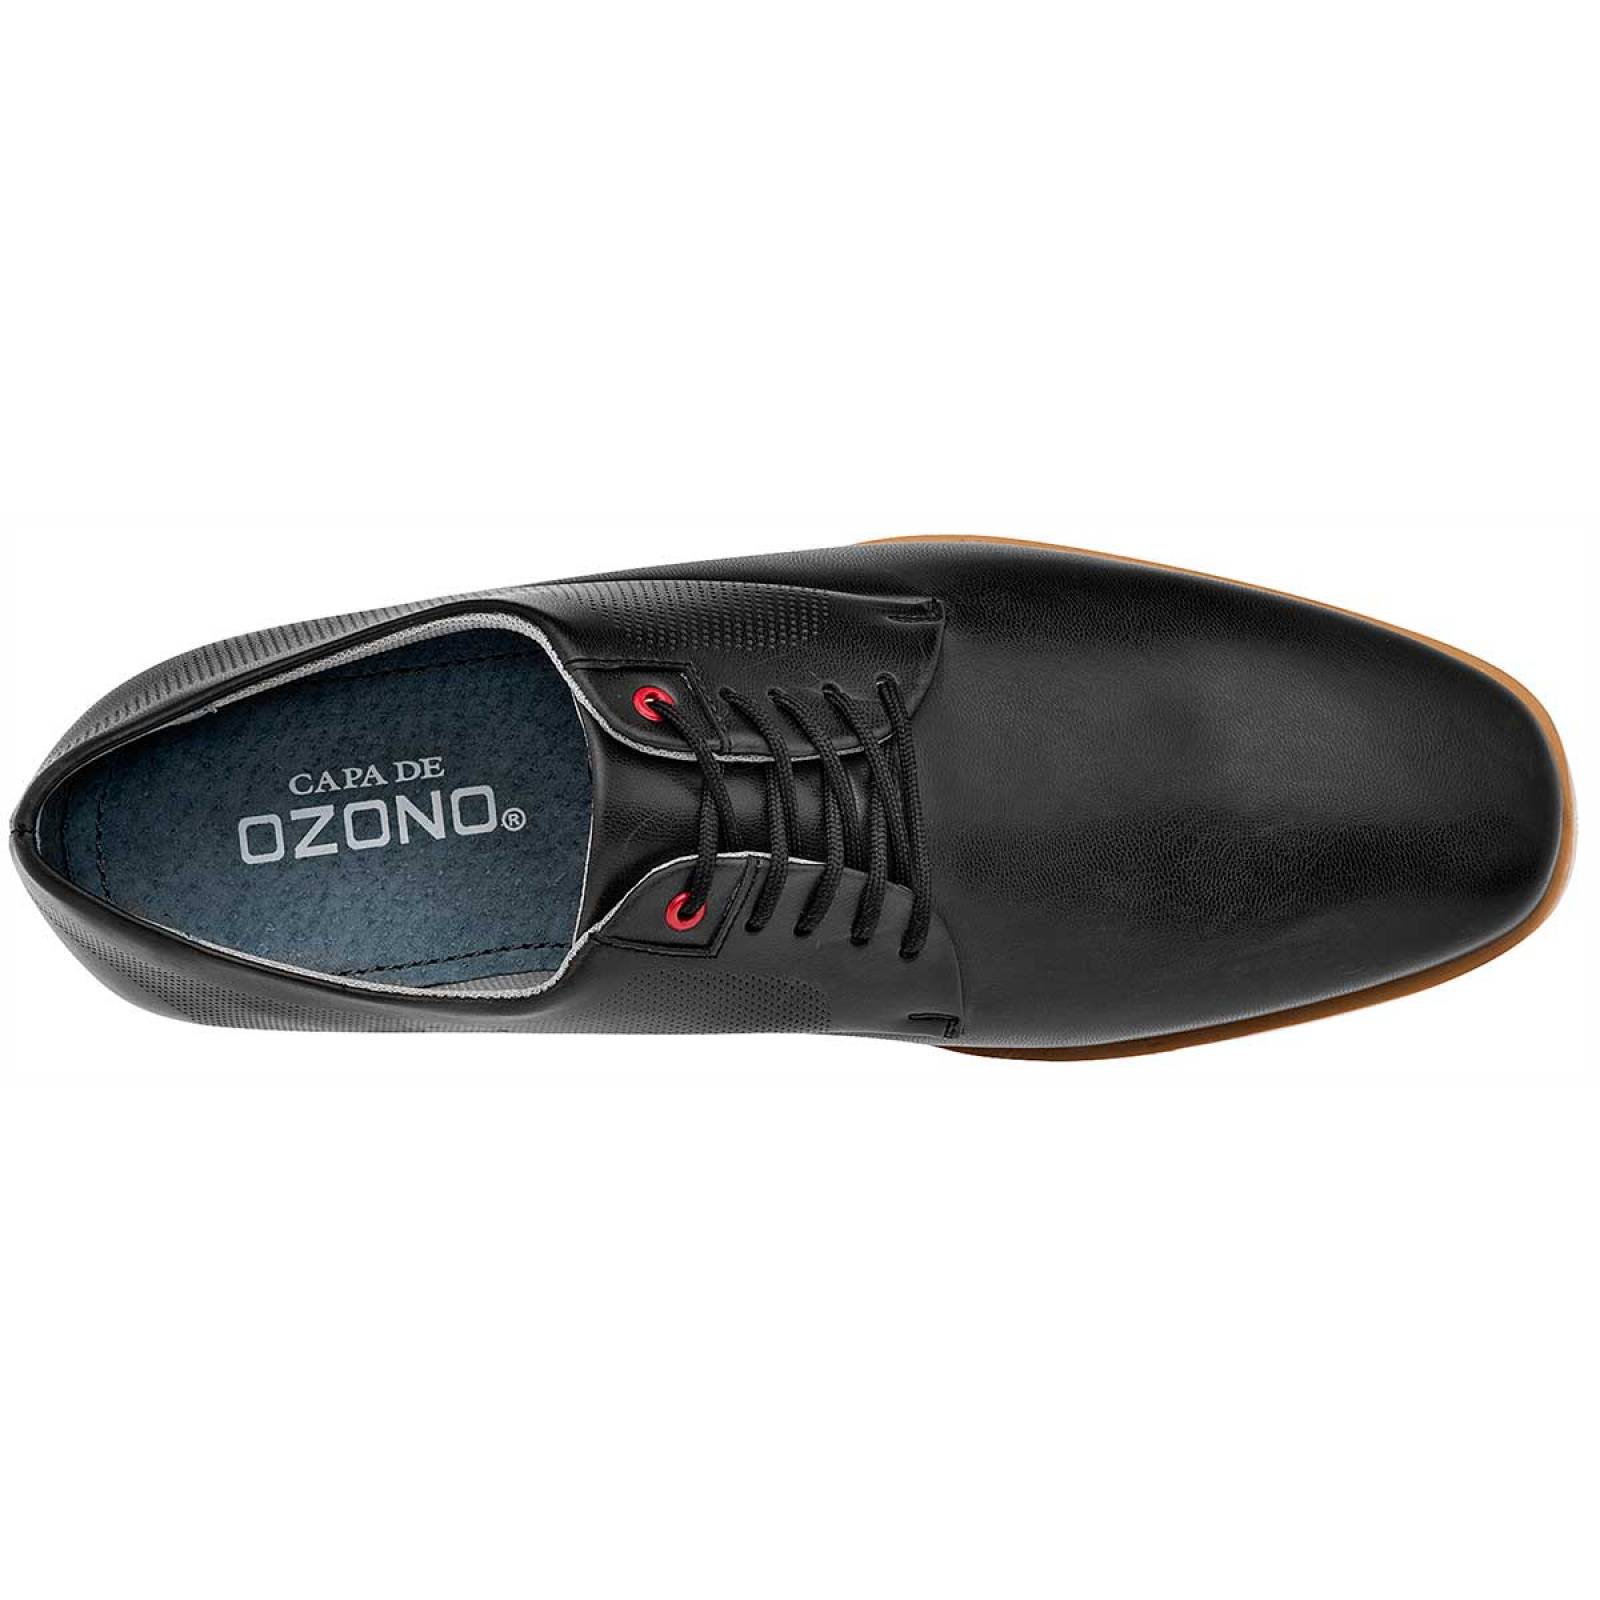 Capa de ozono Zapato Hombre Negro